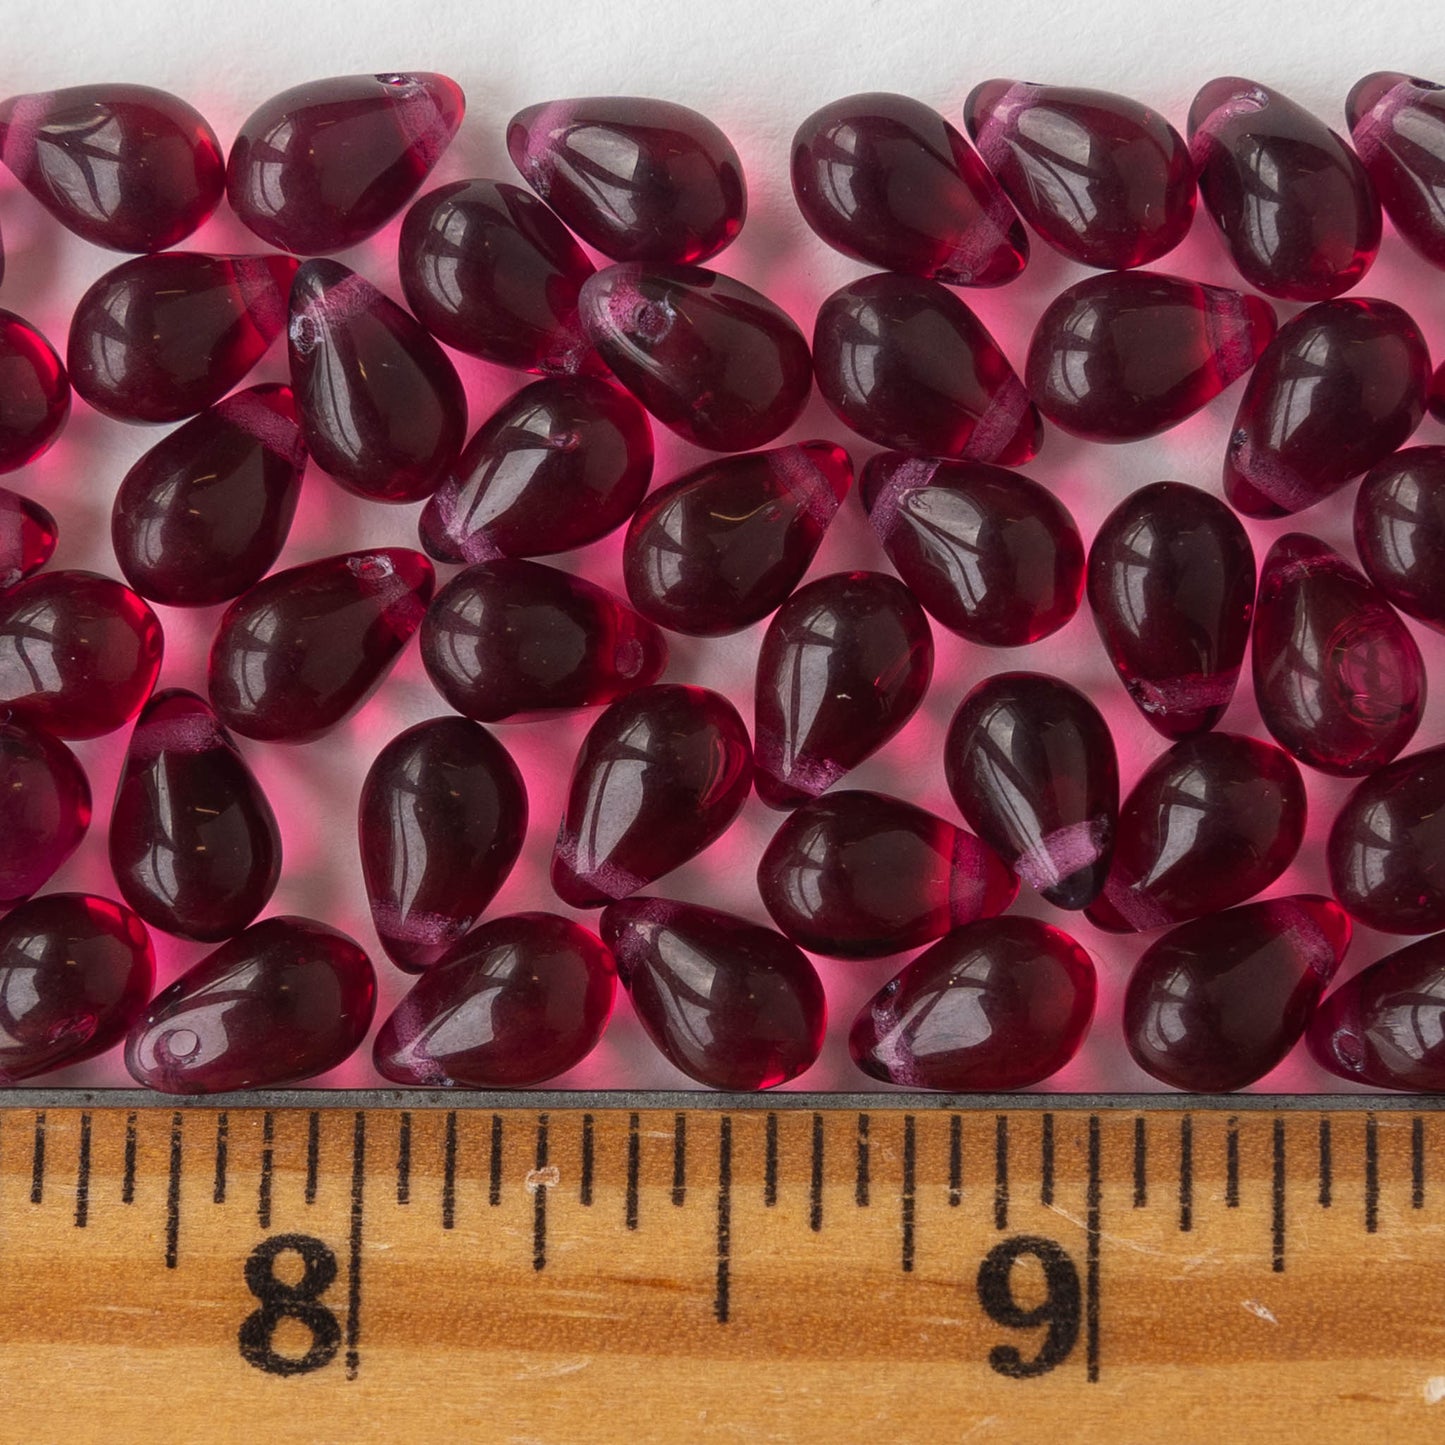 6x9mm Glass Teardrop Beads - Cranberry Red - 50 Beads